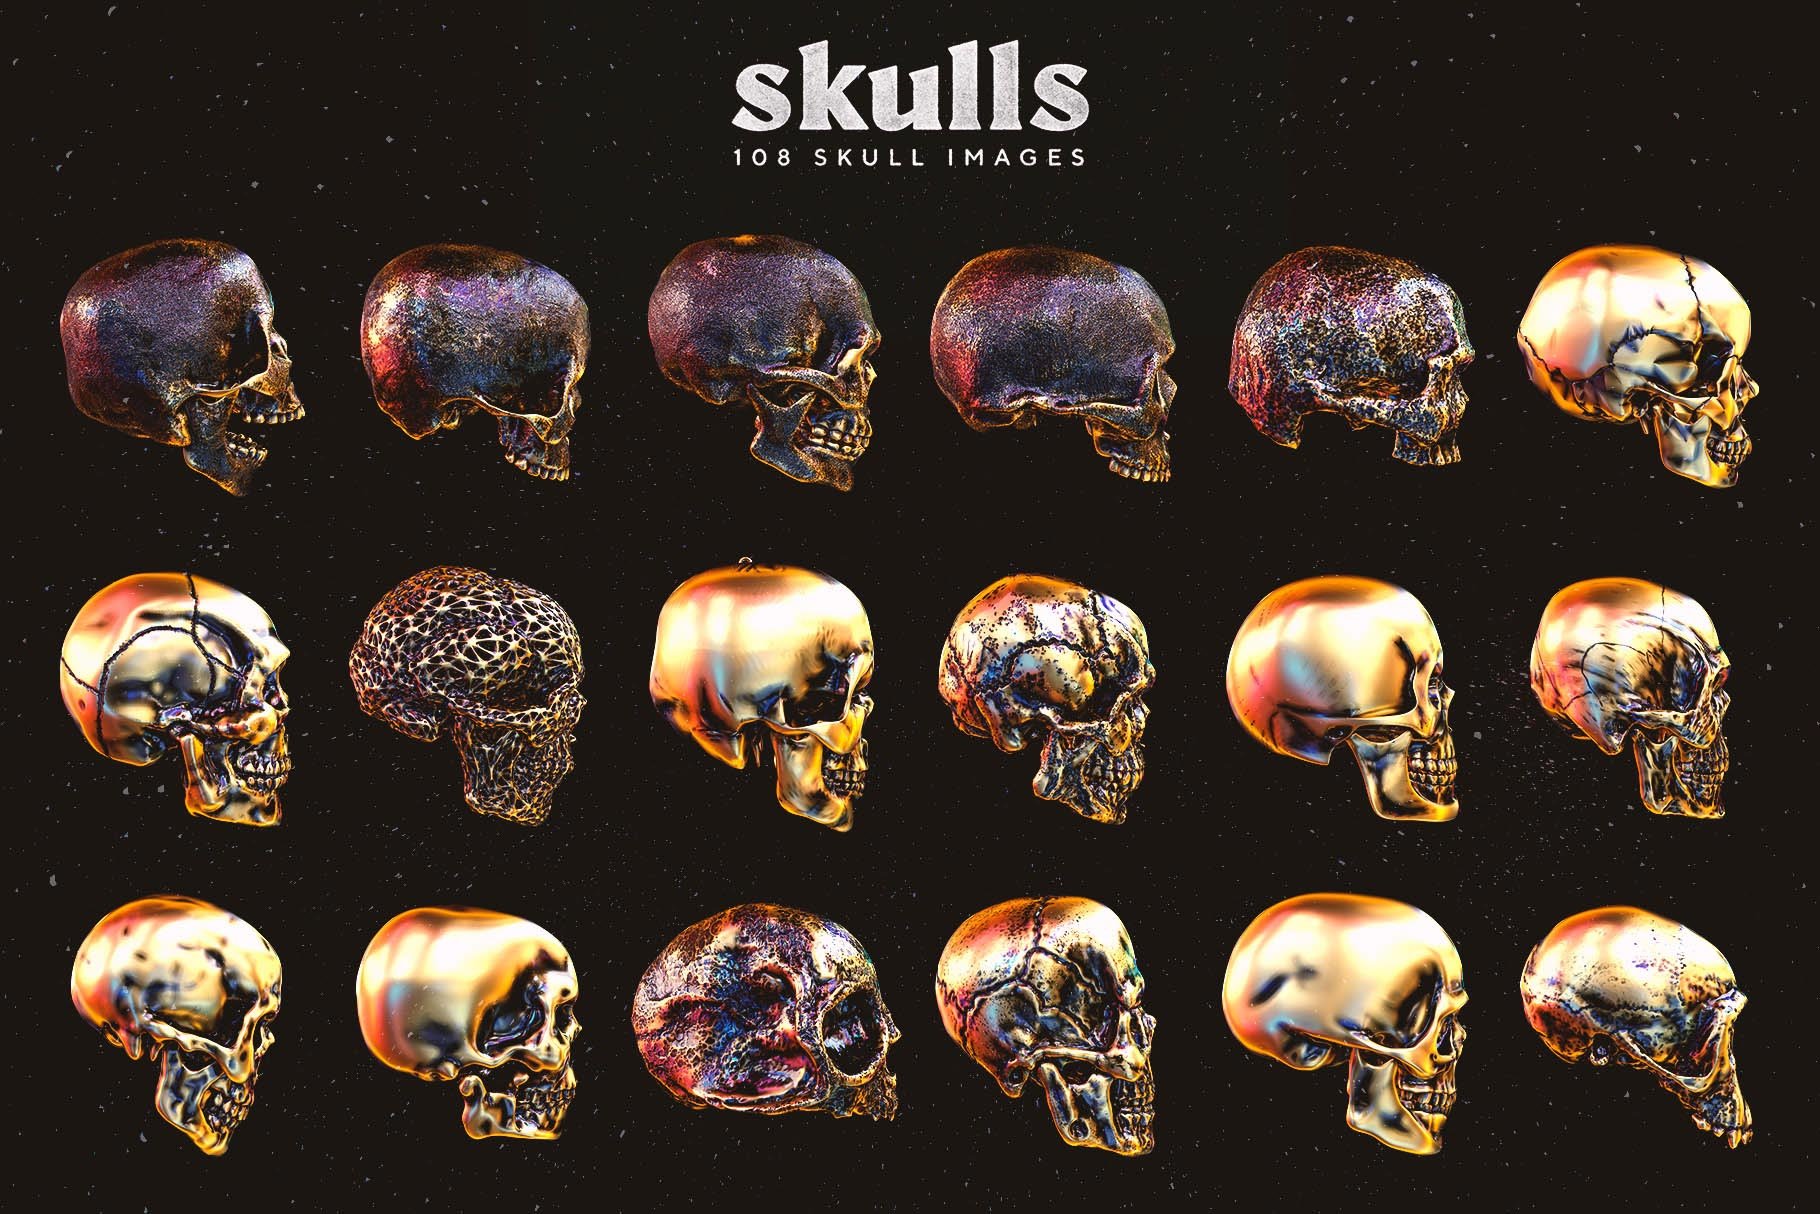 Skulls 108个高分辨率骷髅头骨逼真骨骼金属纹理PNG素材 图片素材 第3张